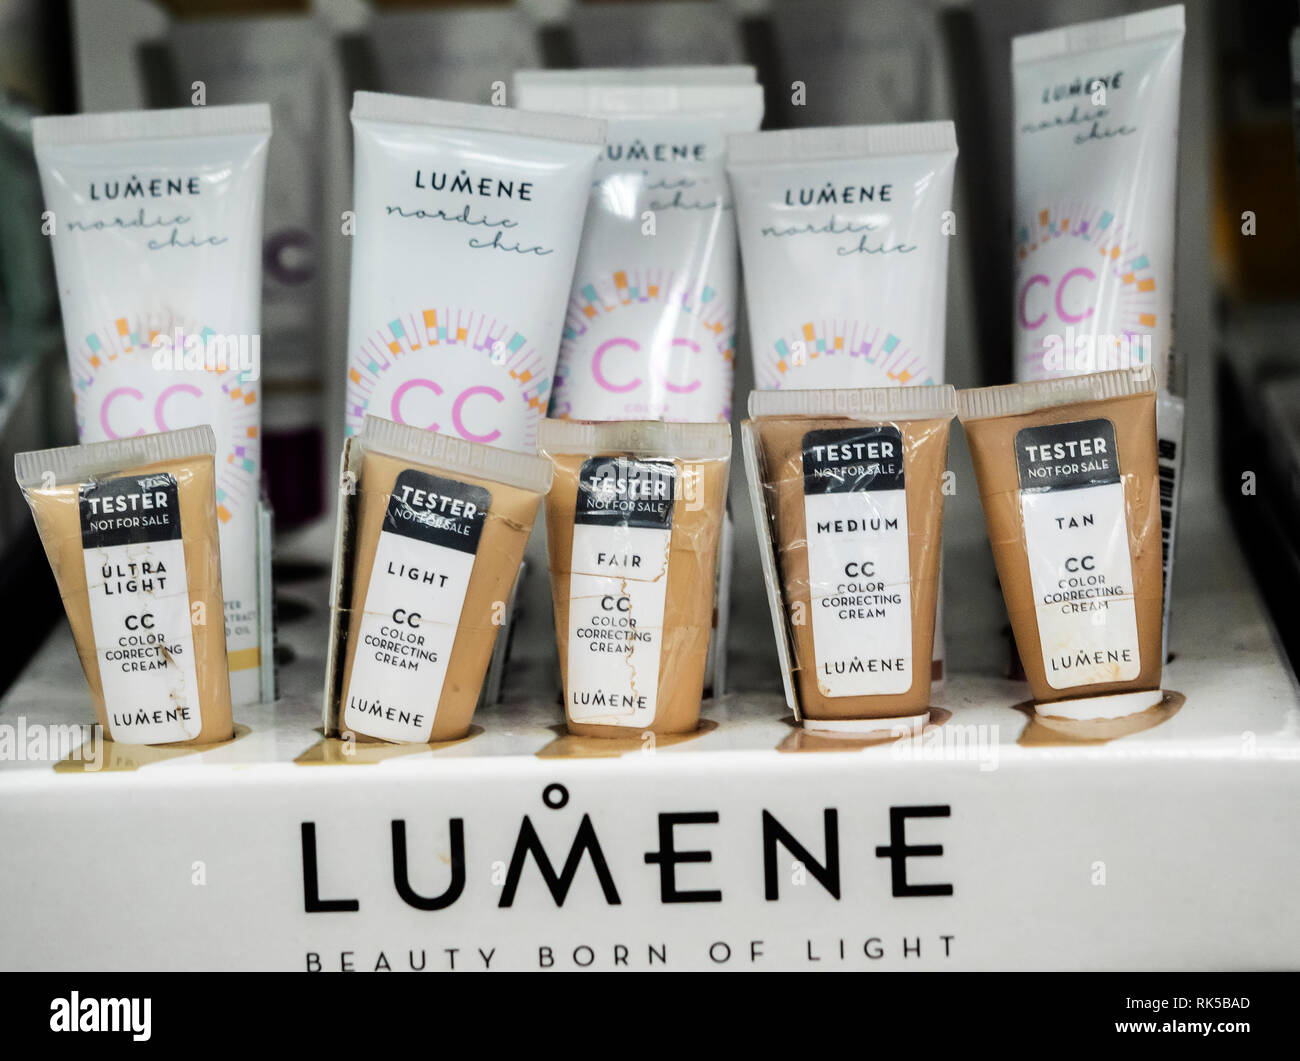 Lumene CC Color Correcting Cream seen at the store Stock Photo - Alamy